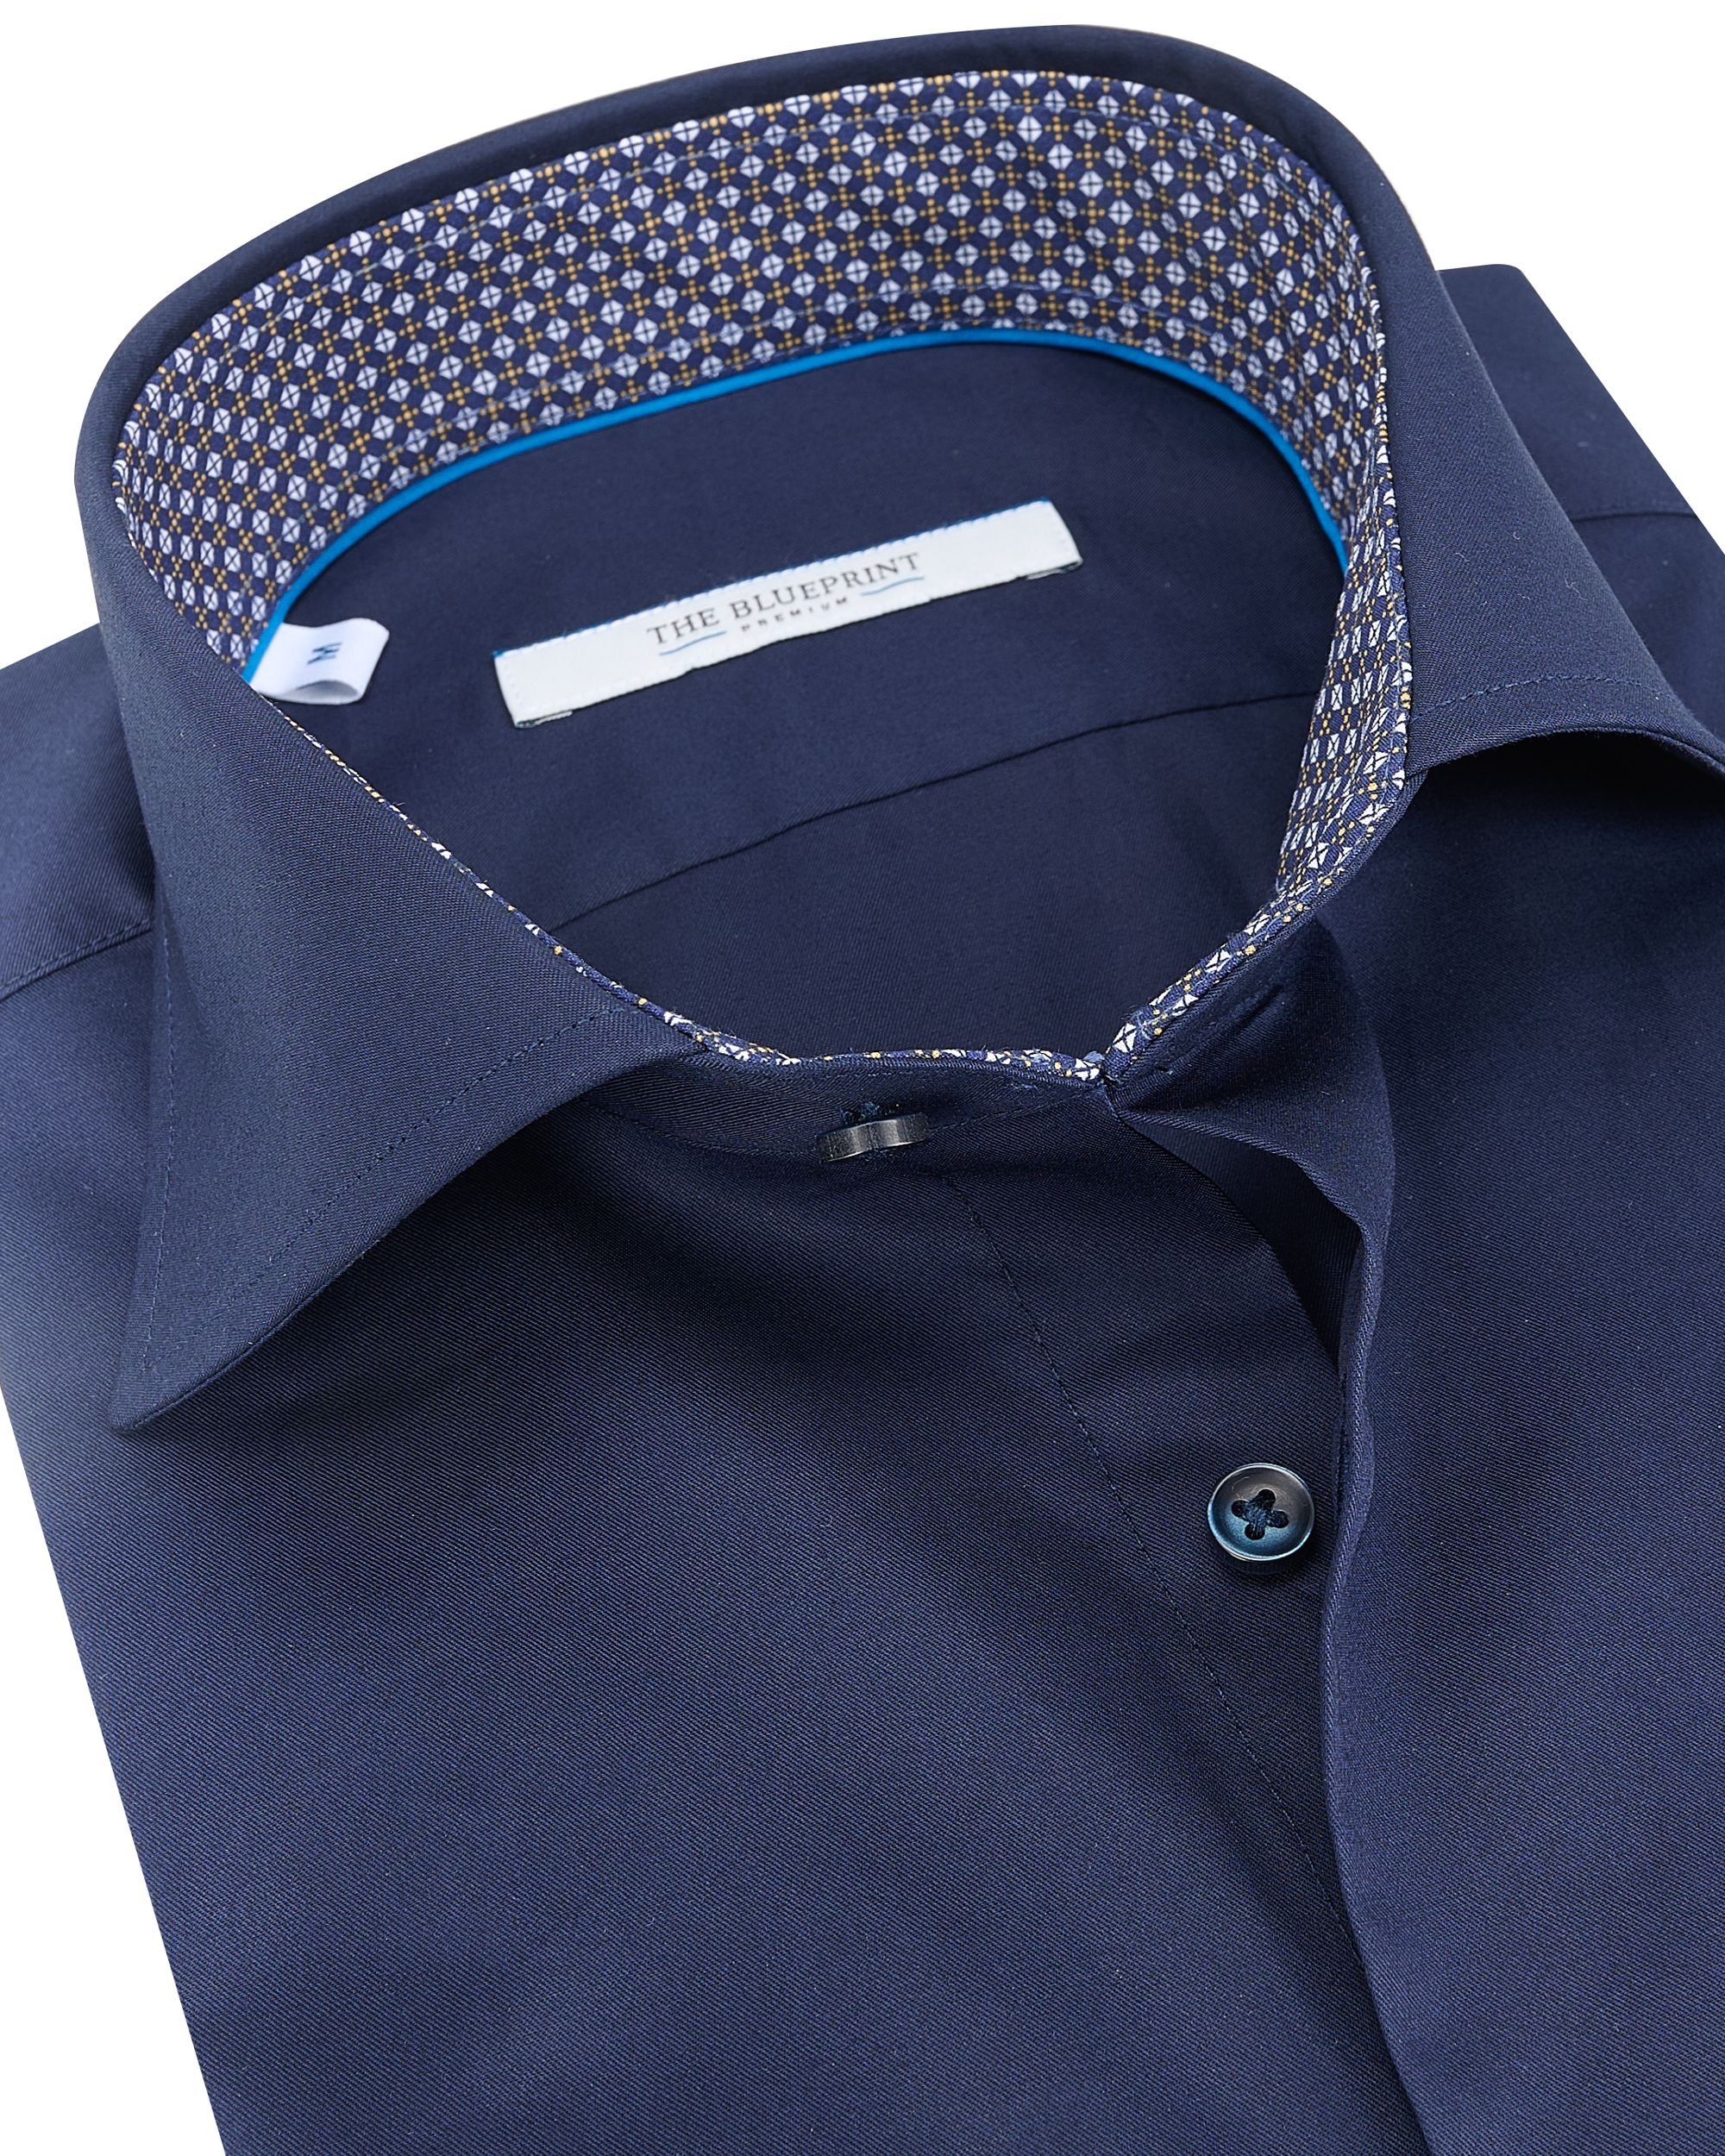 The BLUEPRINT Premium - Trendy Overhemd LM NAVY 092074-001-L